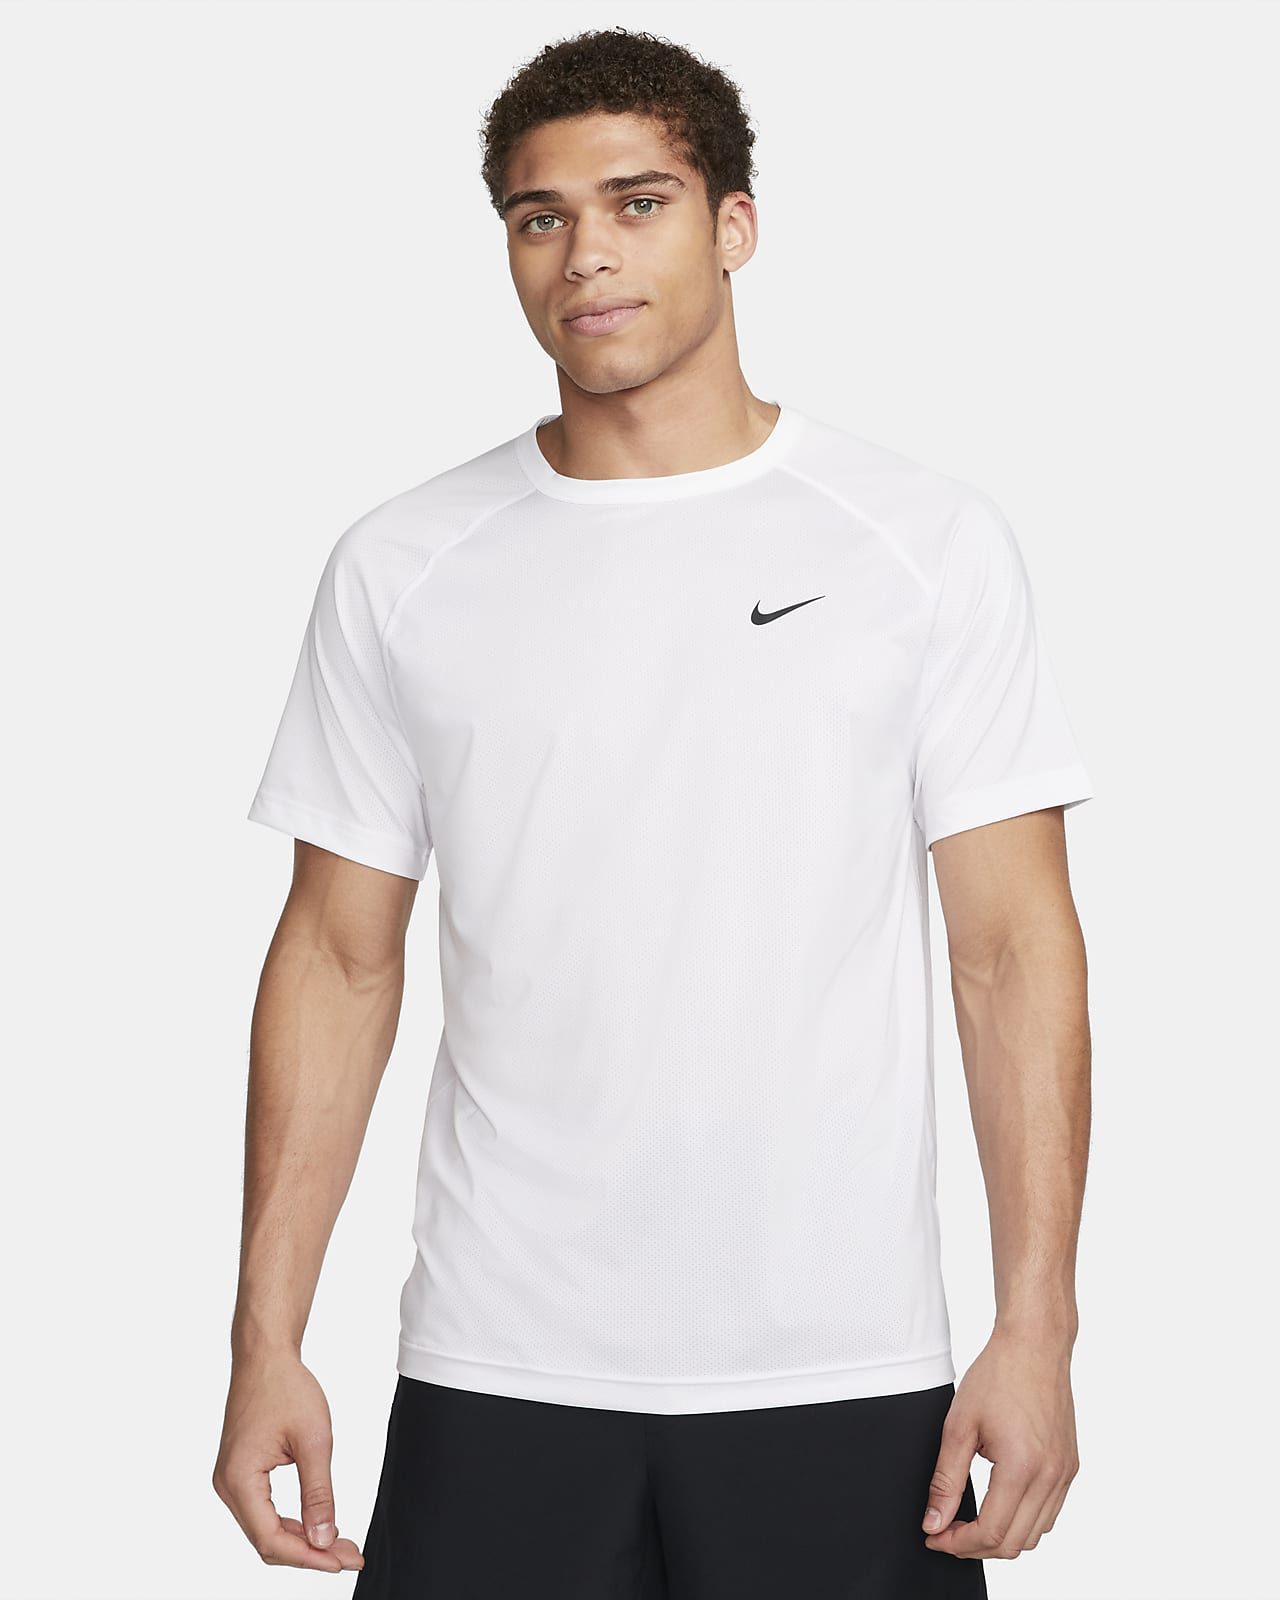 Nike Ready Men's Dri-FIT Short-sleeve Fitness Top. Nike